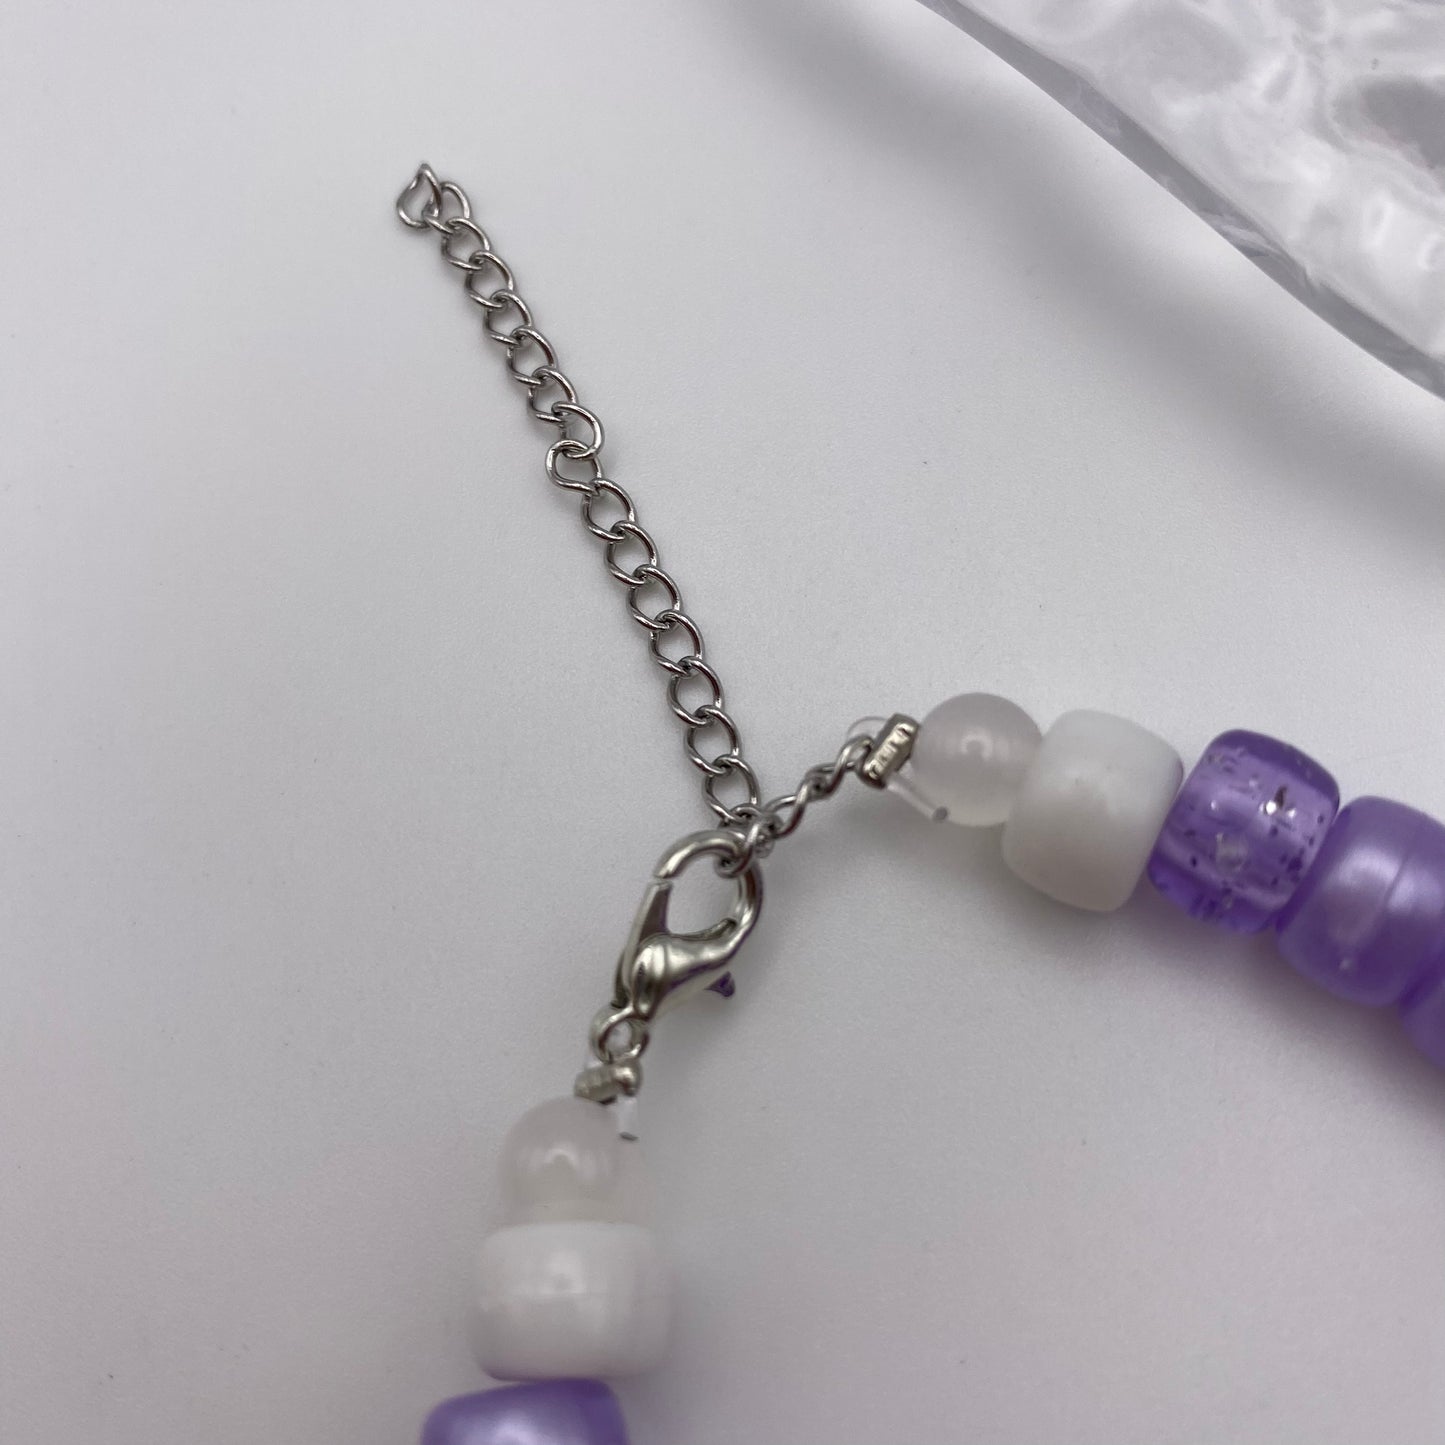 Purple and White Beaded Bracelet